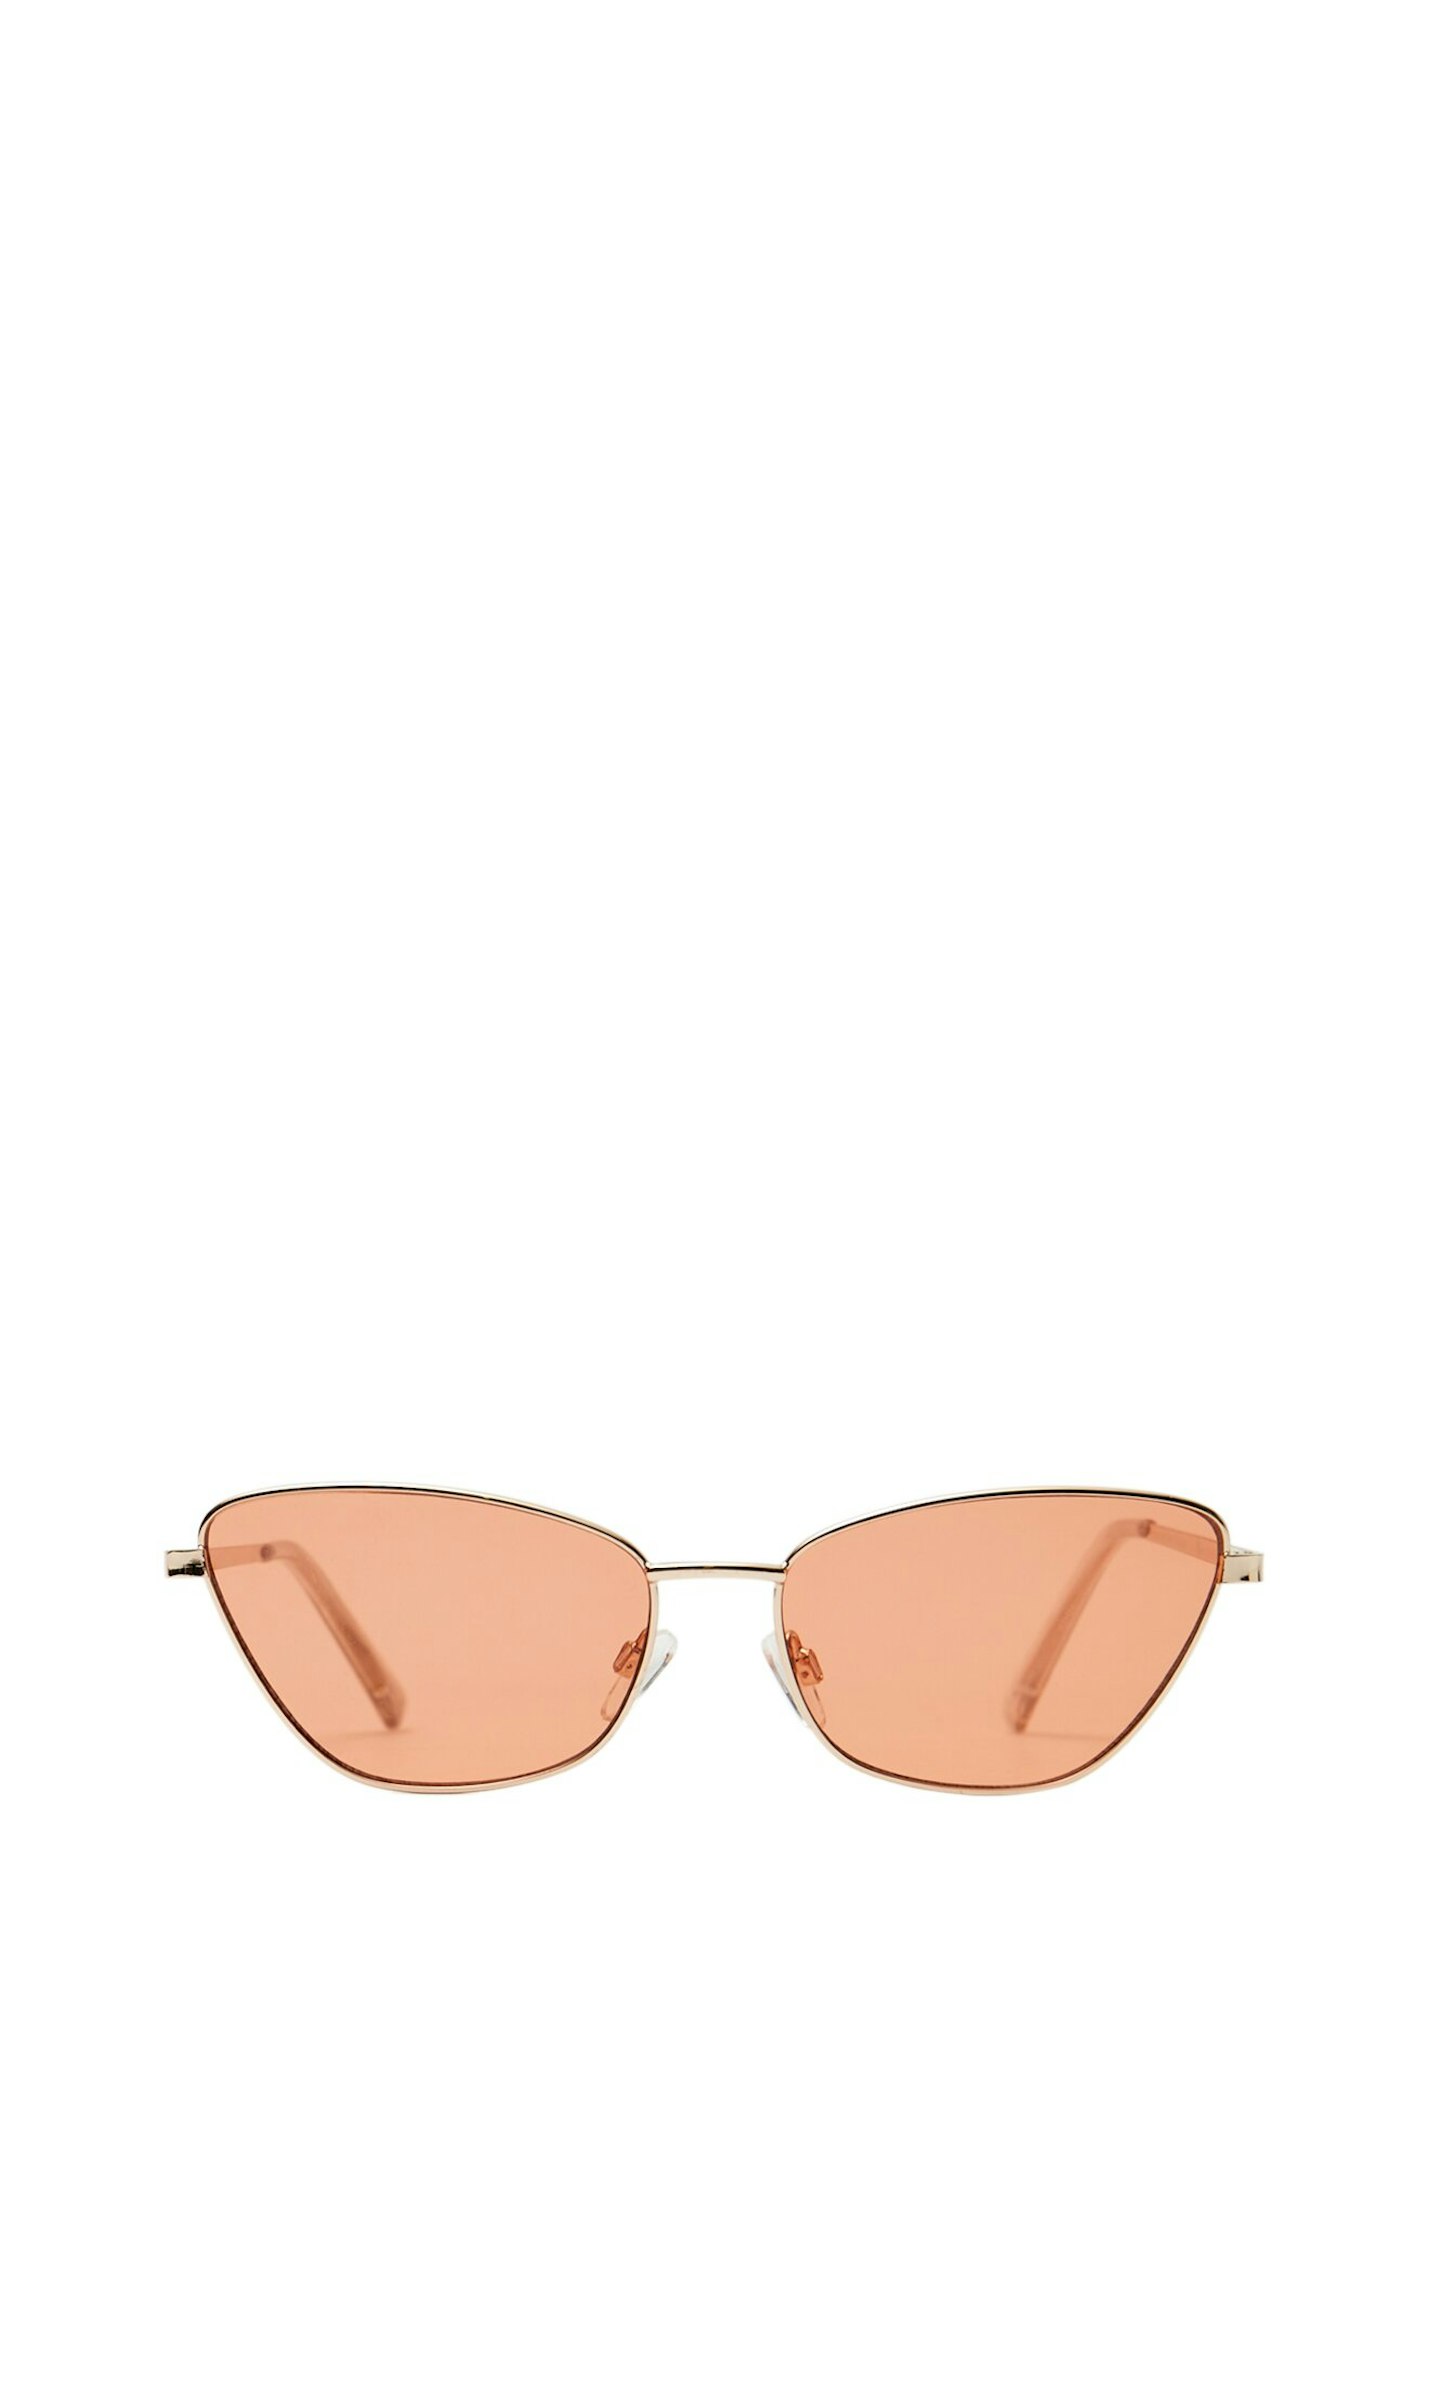 Cat-Eye Sunglasses With Coloured Lenses, £12.99